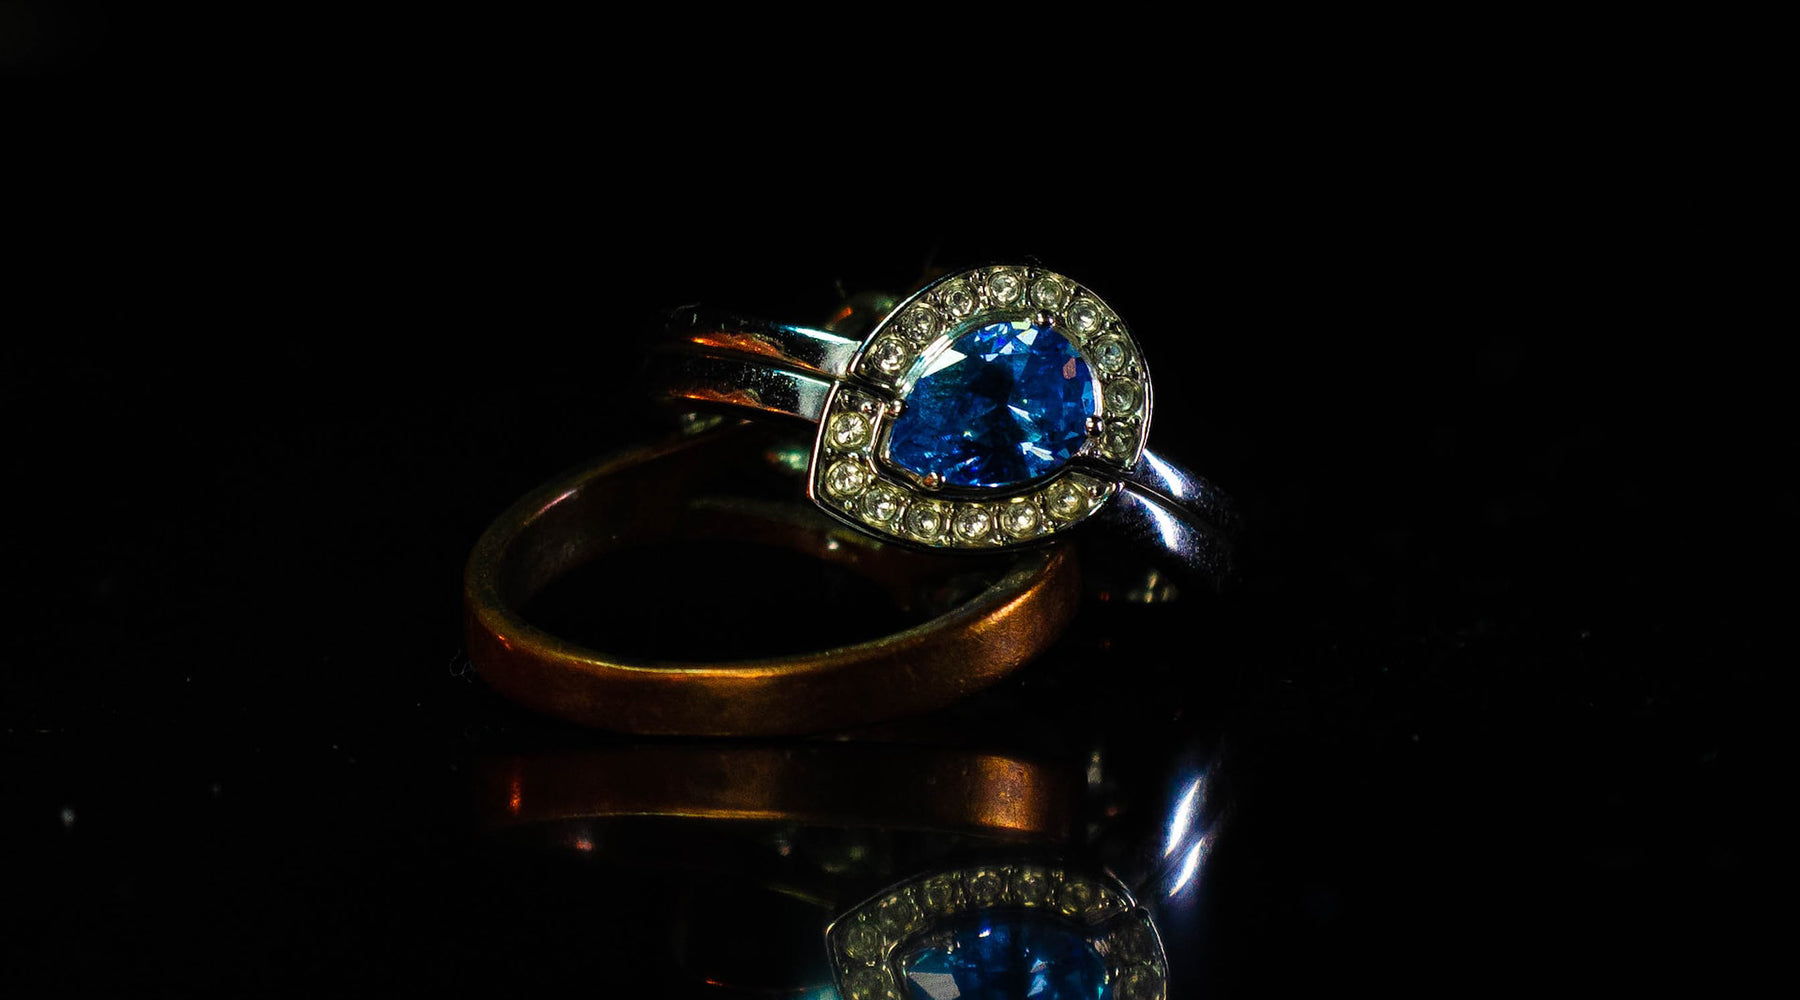 sapphire blue crystal fashion ring on dark surface against dark background